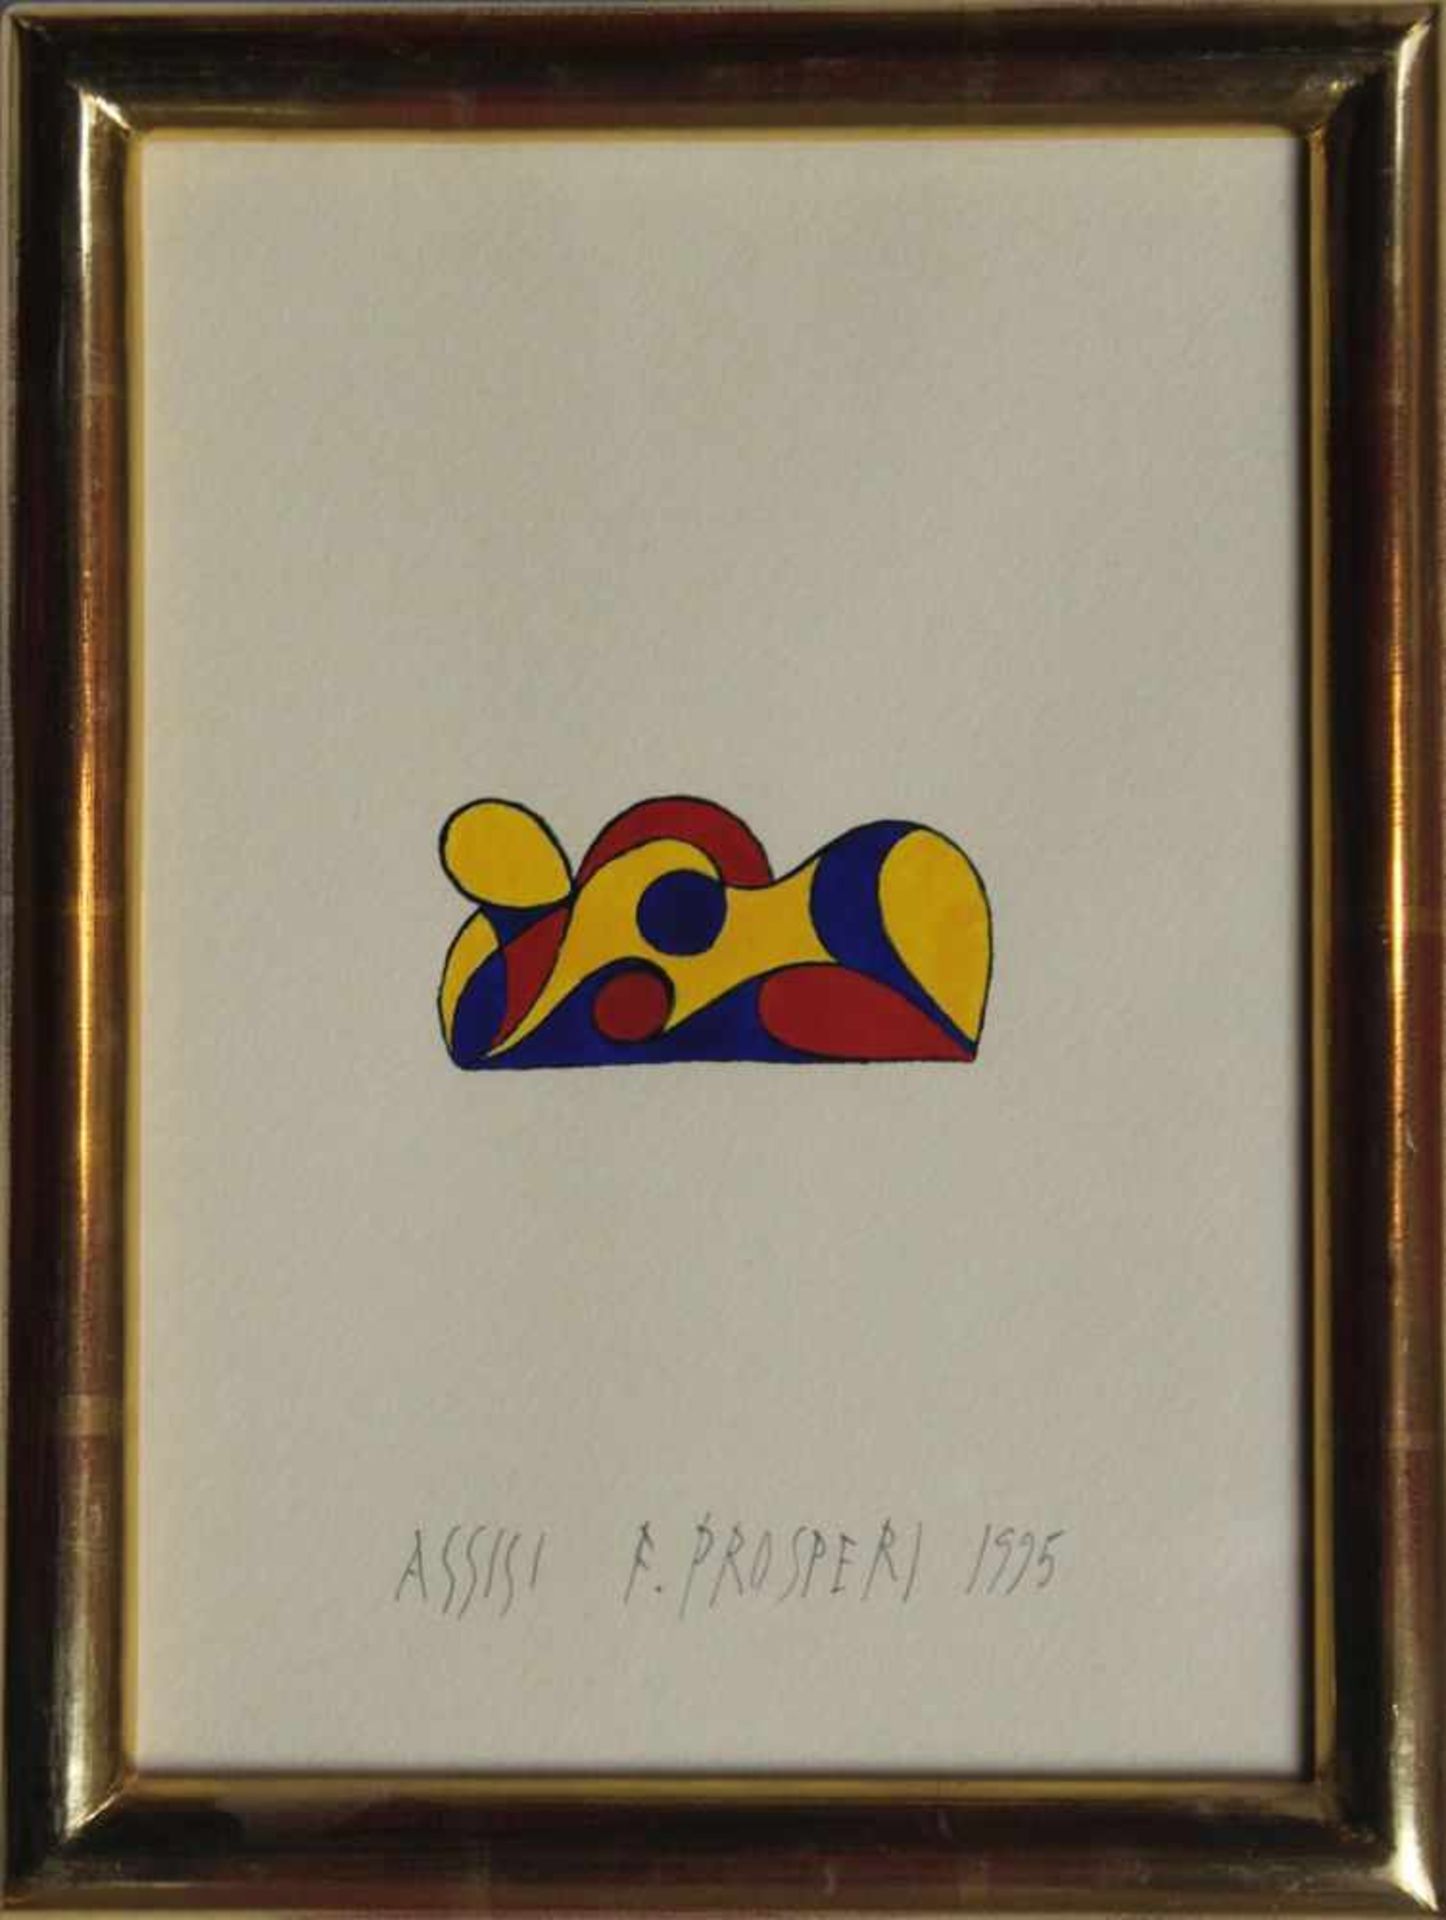 Aquarell - Franco Prosperi (1939 Tunesien - ansässig Assisi Italien) "Liegender Akt", signiert und